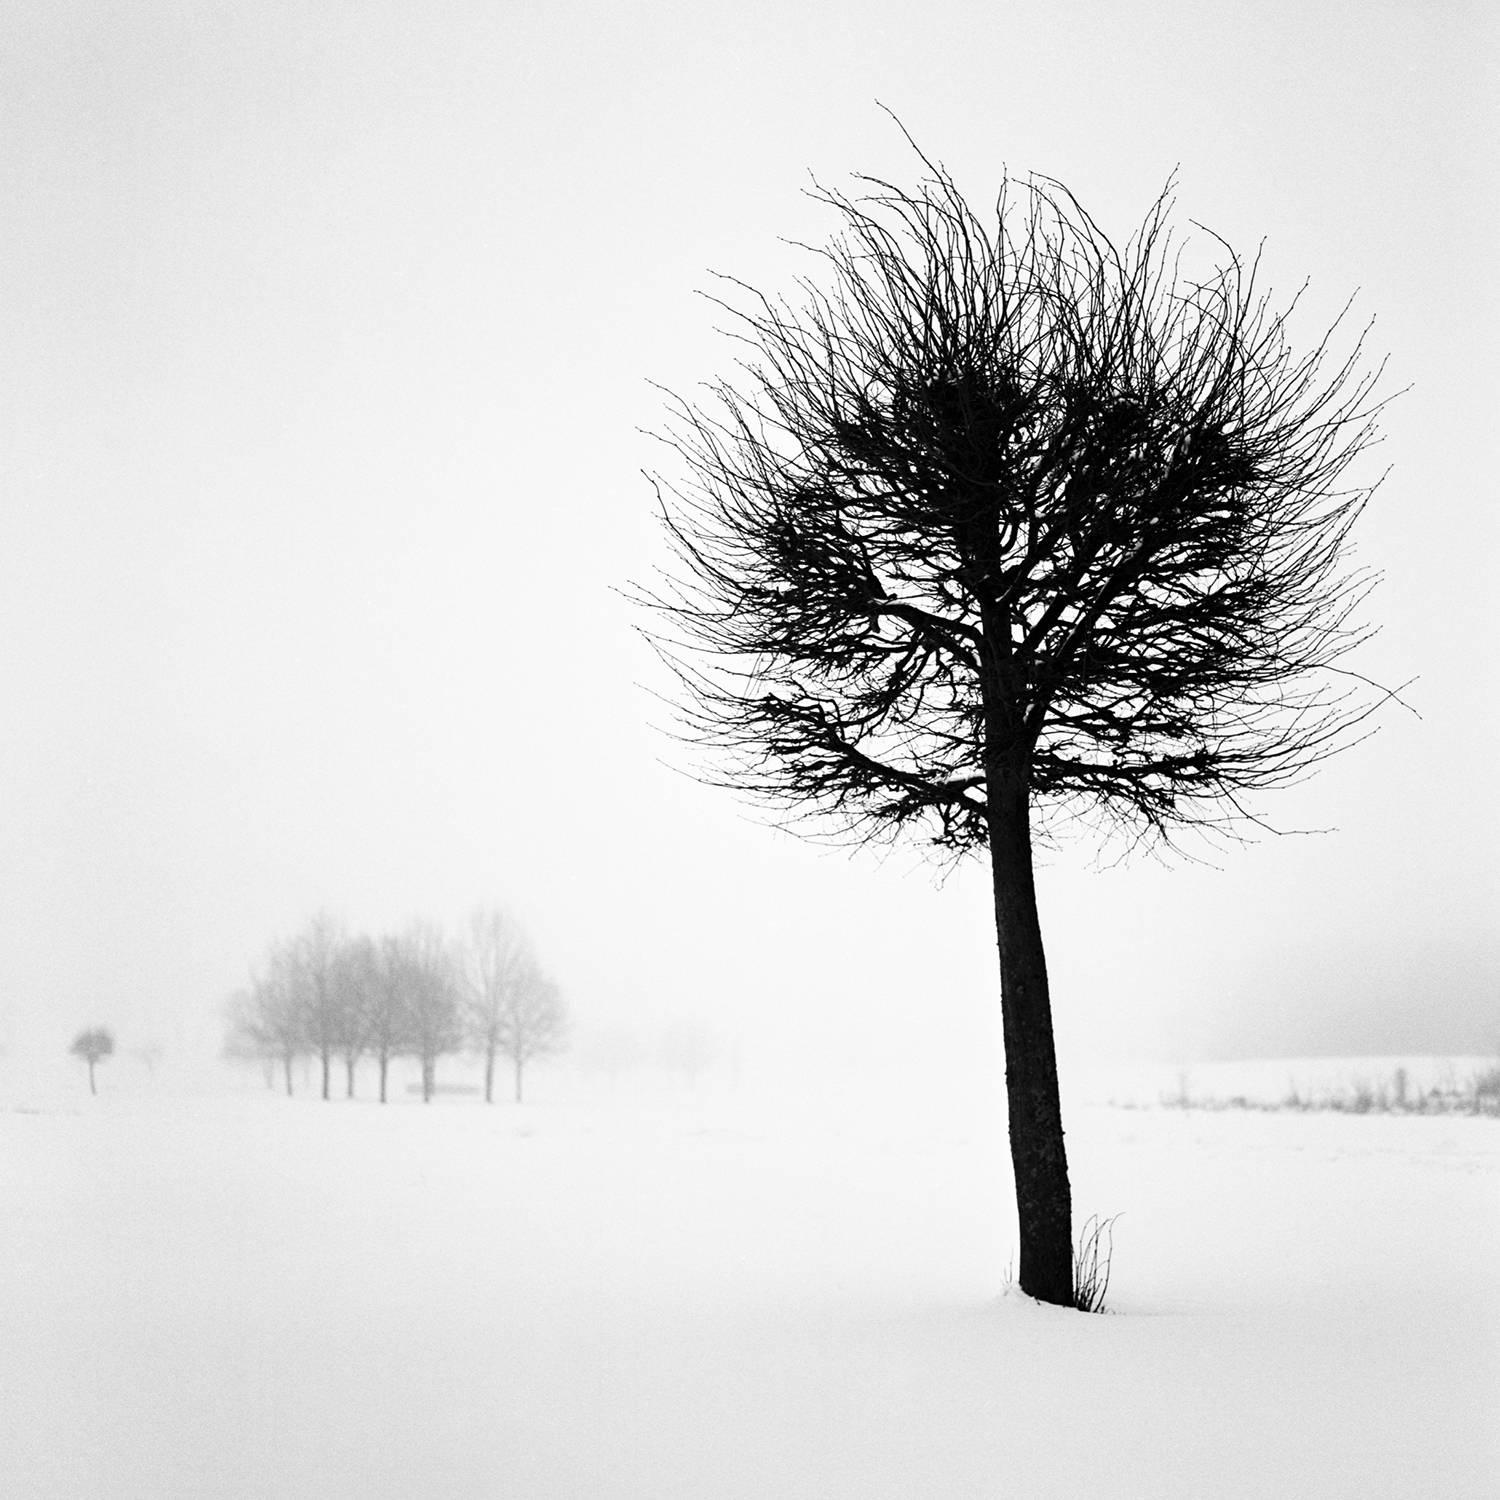 Mindaugas Gabrenas Black and White Photograph - Winter Fashion Trends